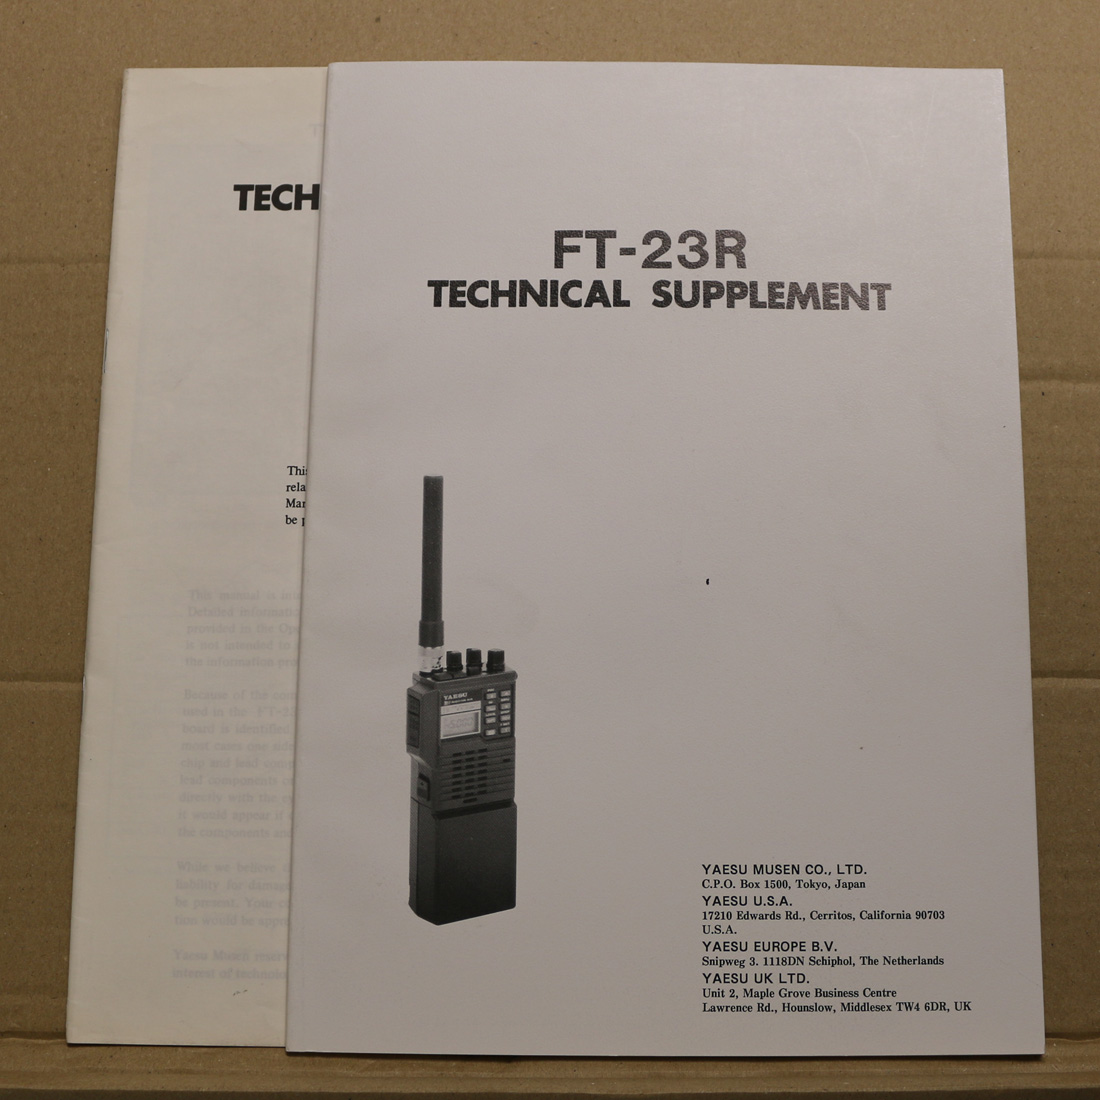 Yaesu FT-23R Technical Supplement